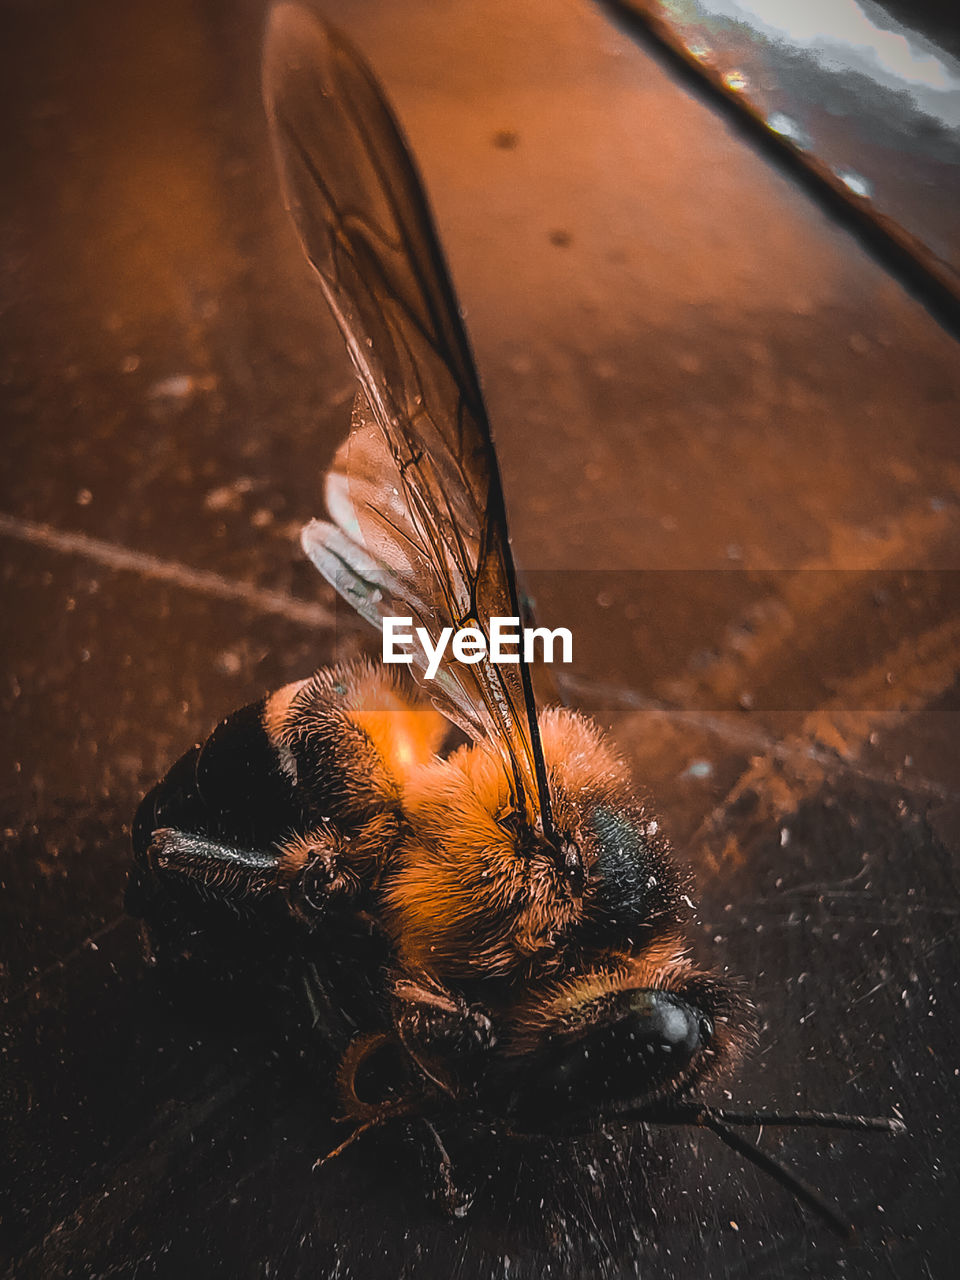 HIGH ANGLE VIEW OF BEE ON FLOOR